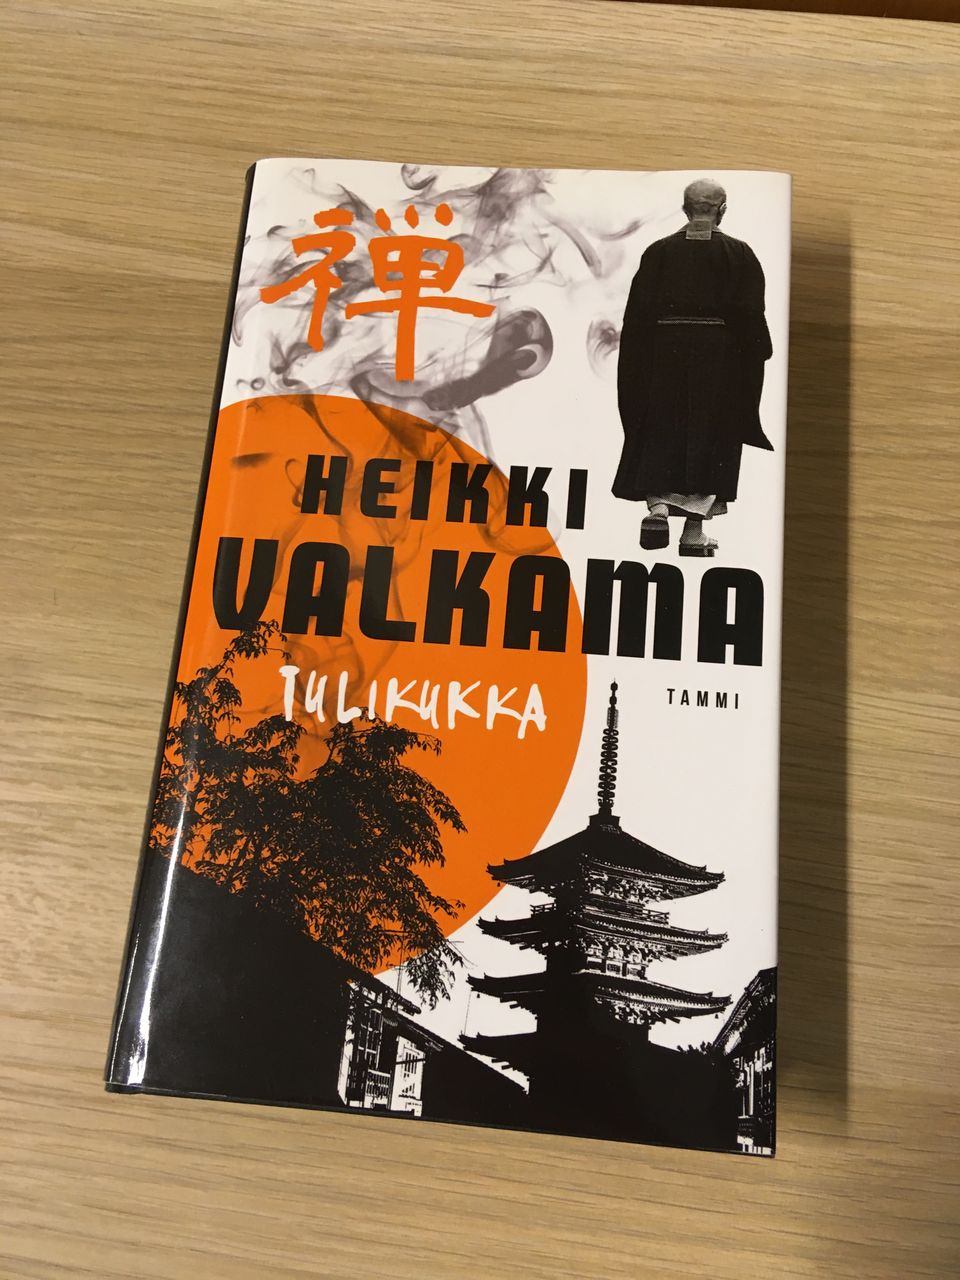 Kirja: Tulikukka, Heikki Valkama | dekkari, japani, jännitys, romaani